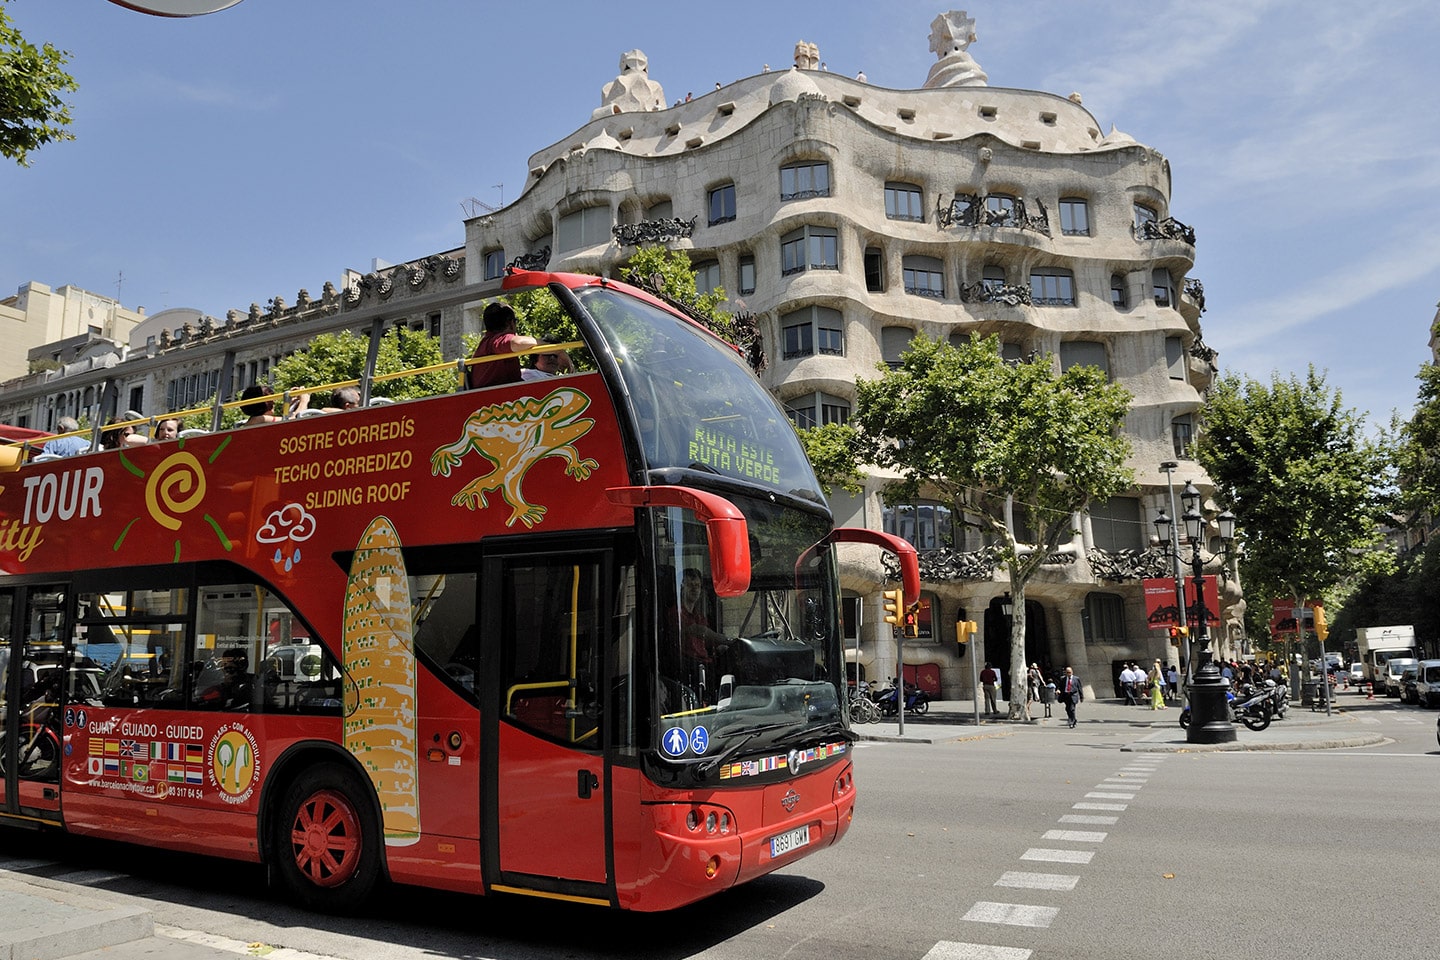 barcelona bus pass tourist